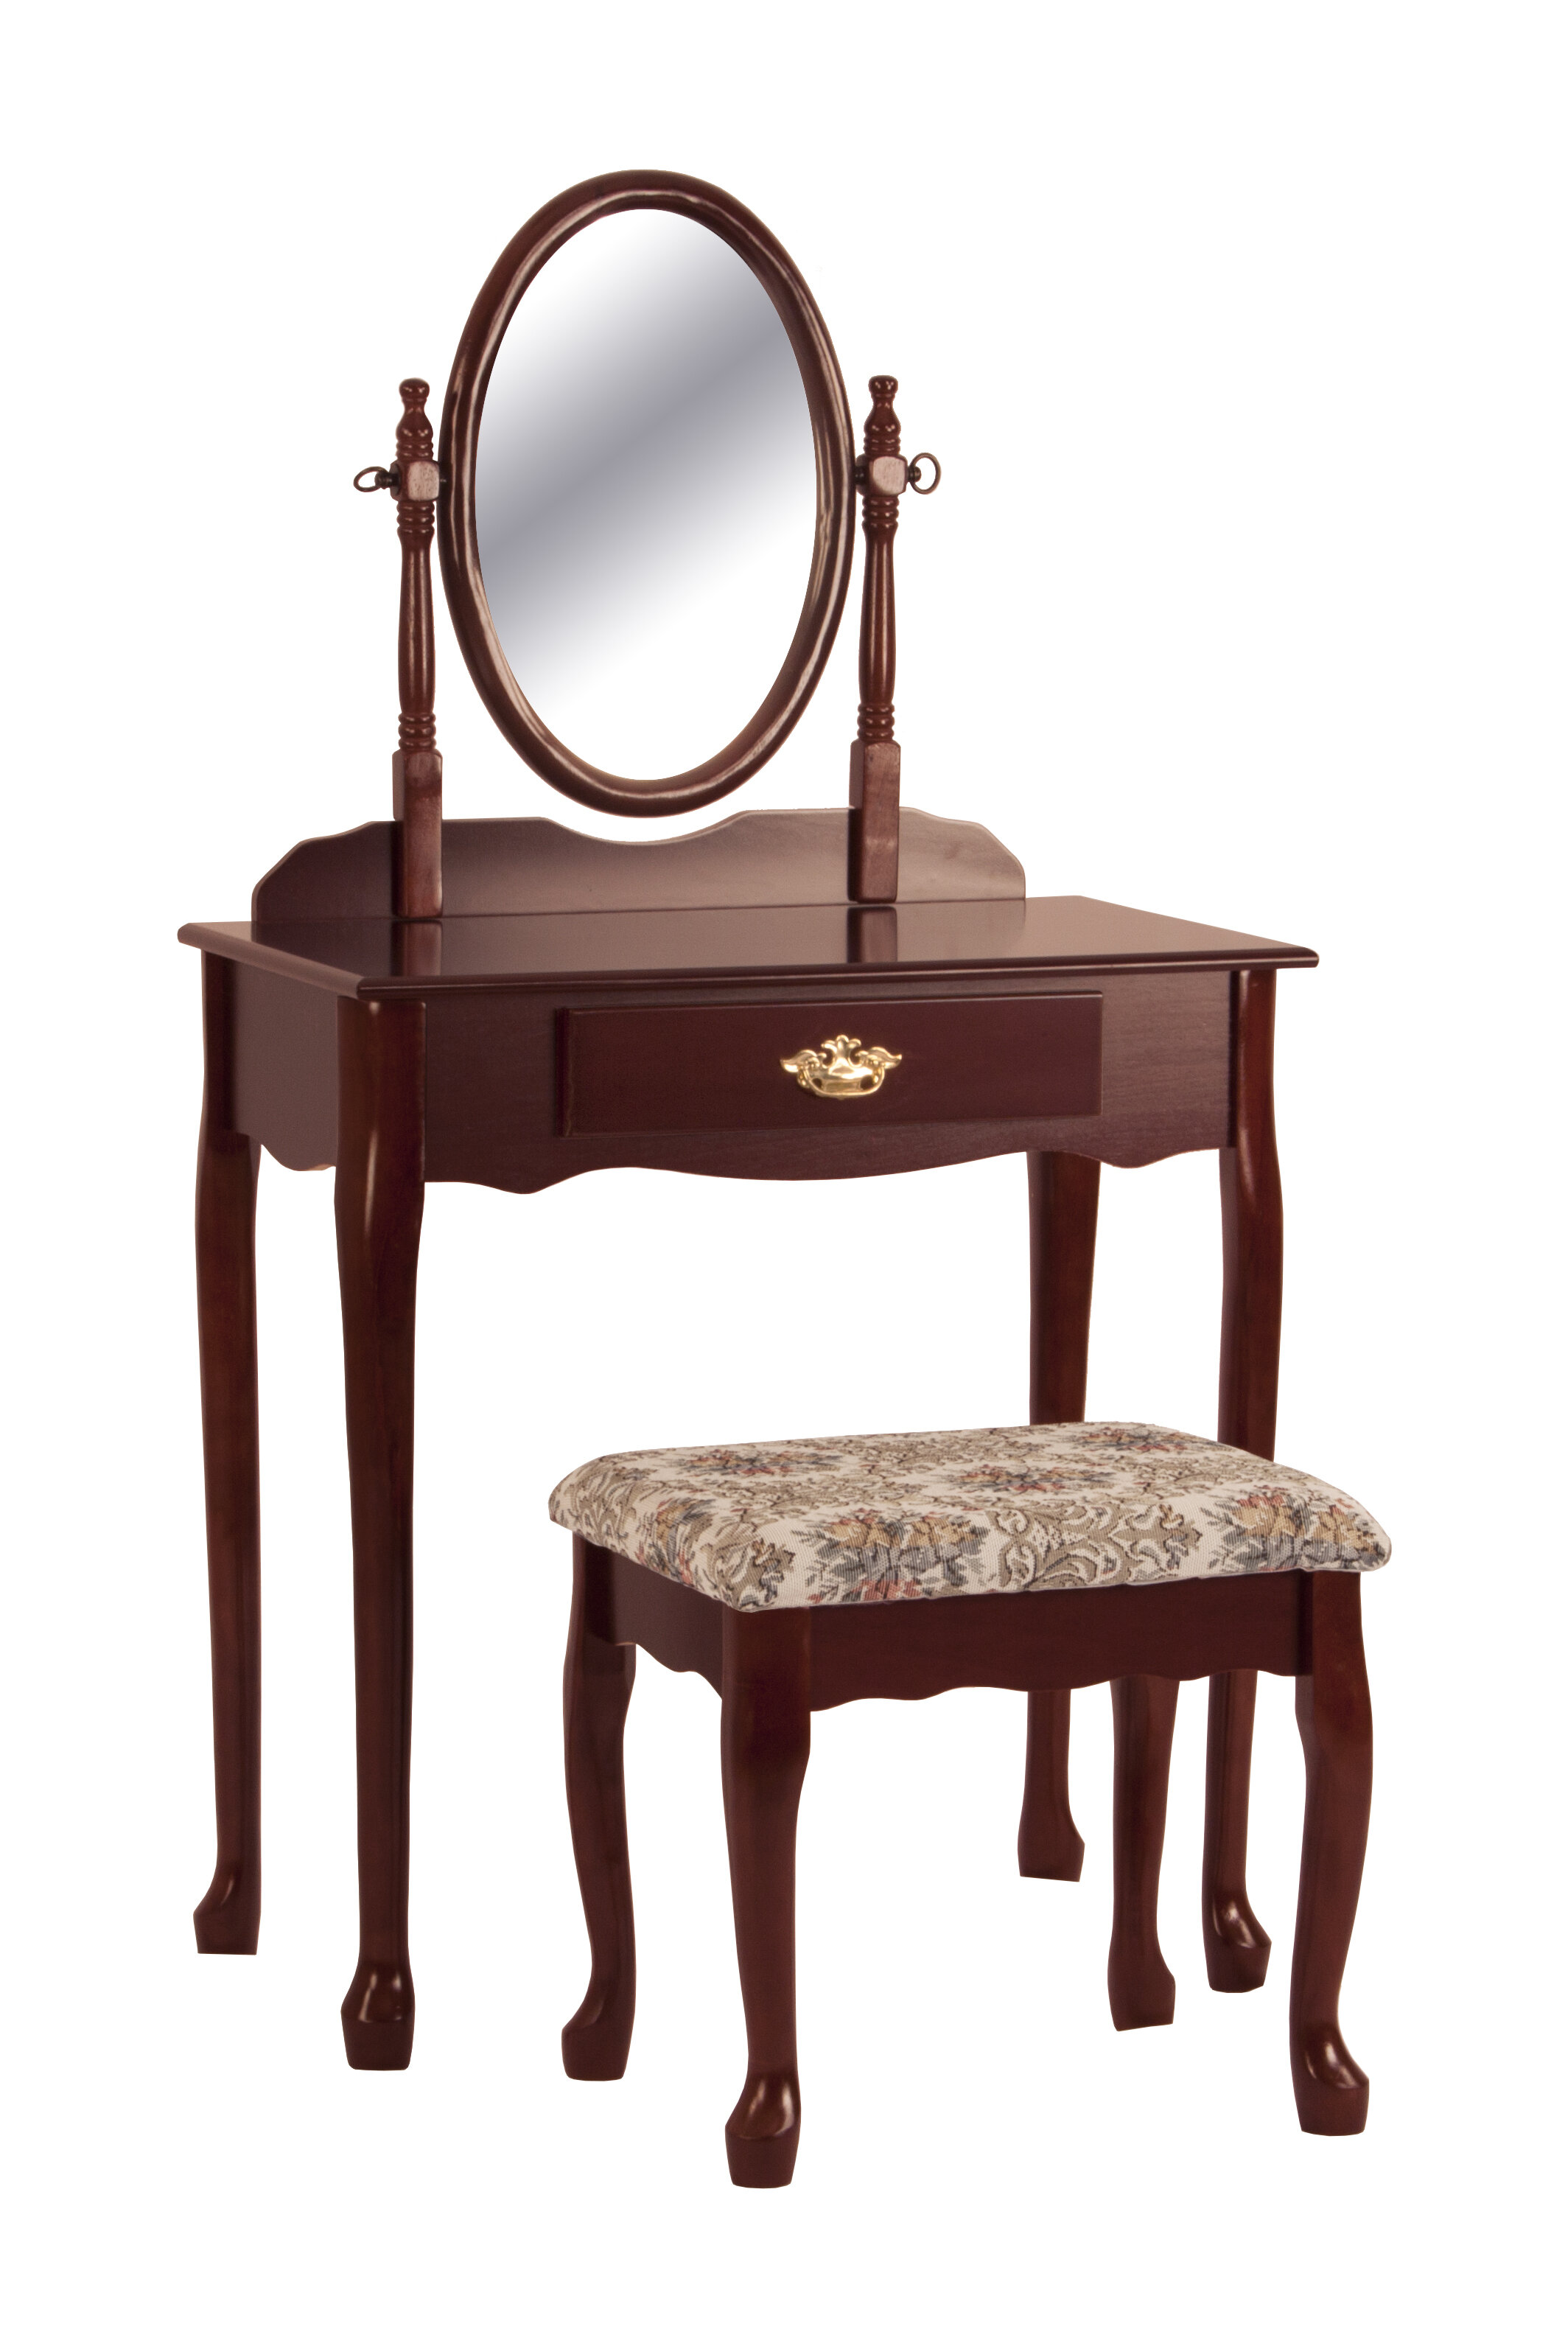 Astoria Grand Jazmyne Vanity Set With Stool And Mirror Reviews Wayfair